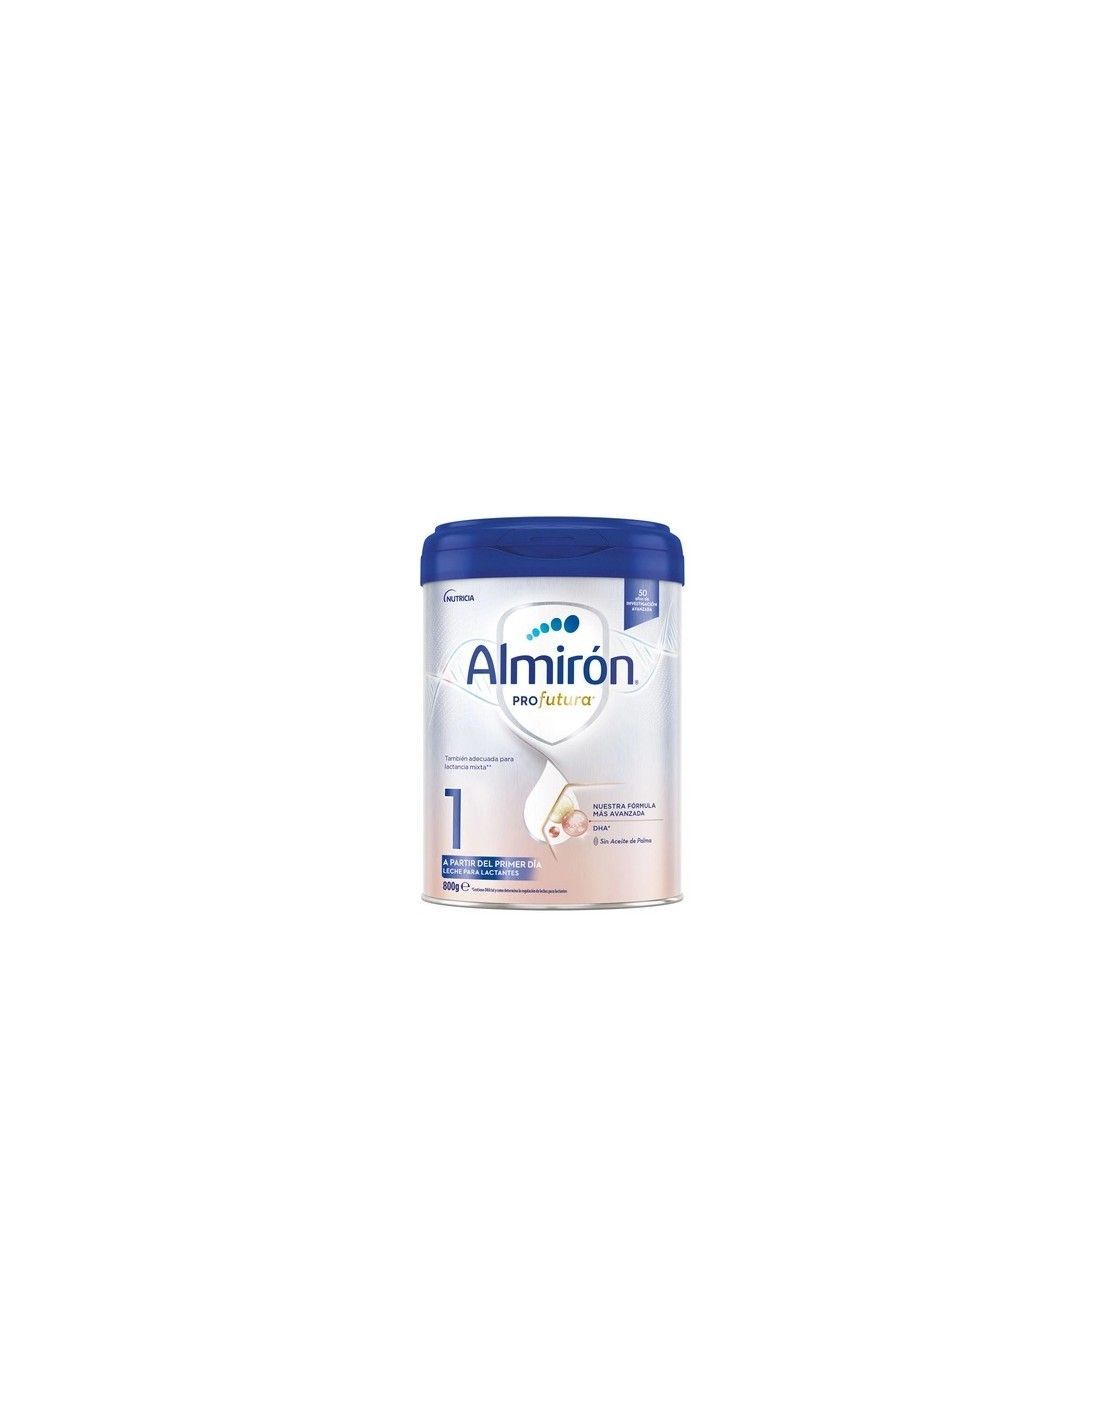 Almirón milk profutura duobiotik 1 800g